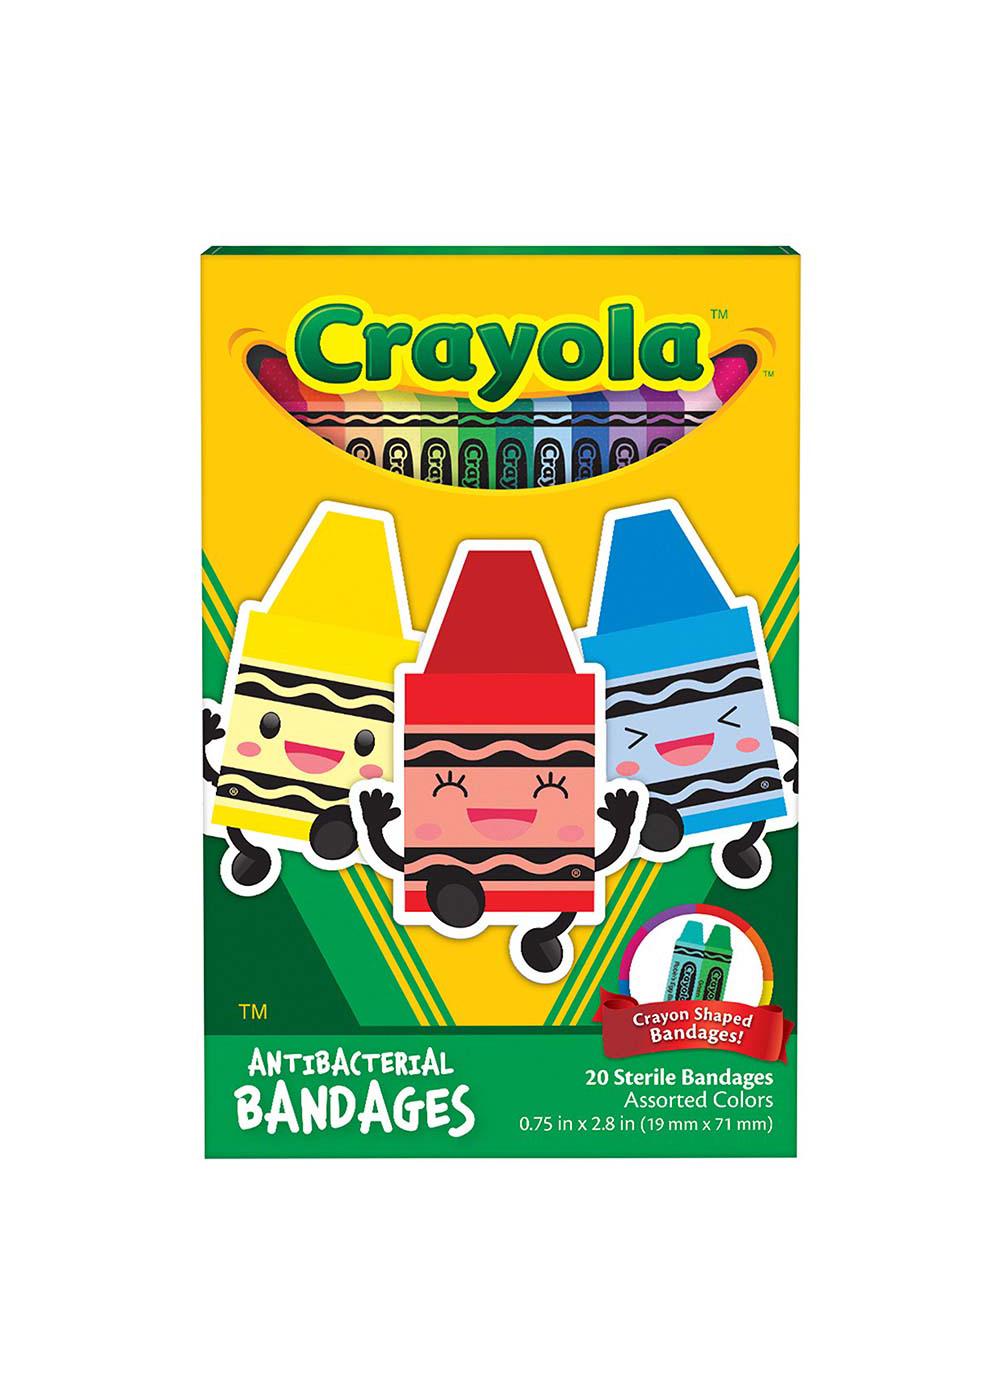 Crayola Antibacterial Bandages; image 1 of 2